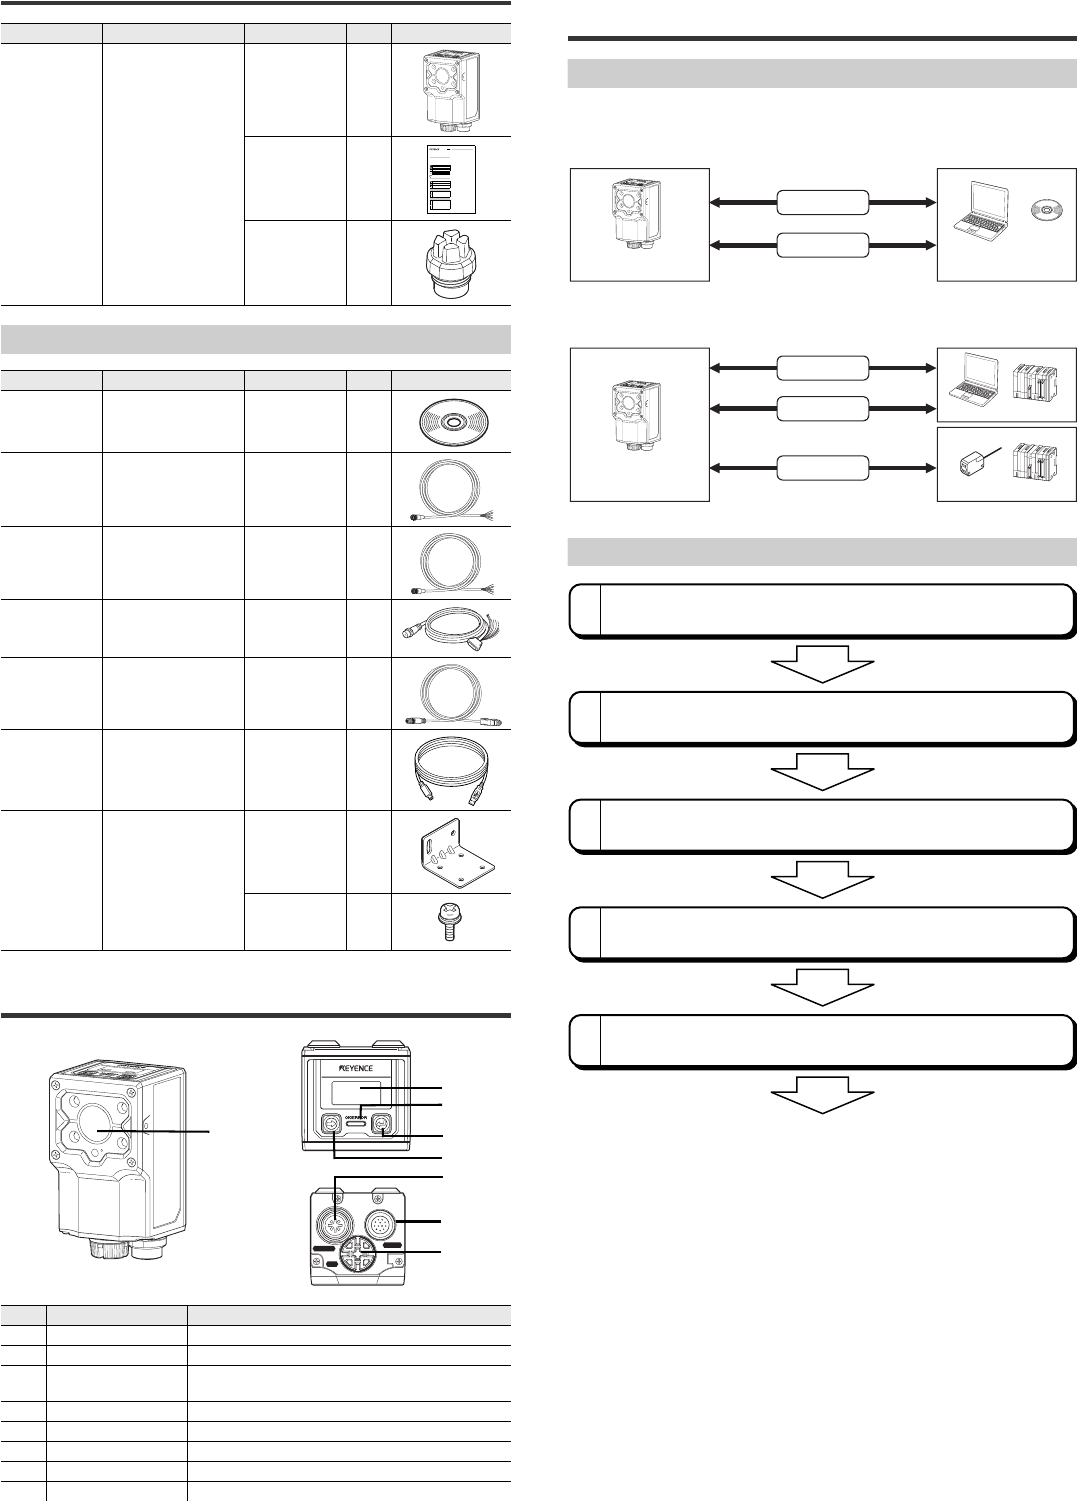 keyence sr 1000 wiring diagram beautiful sr 1000 escaner manual png